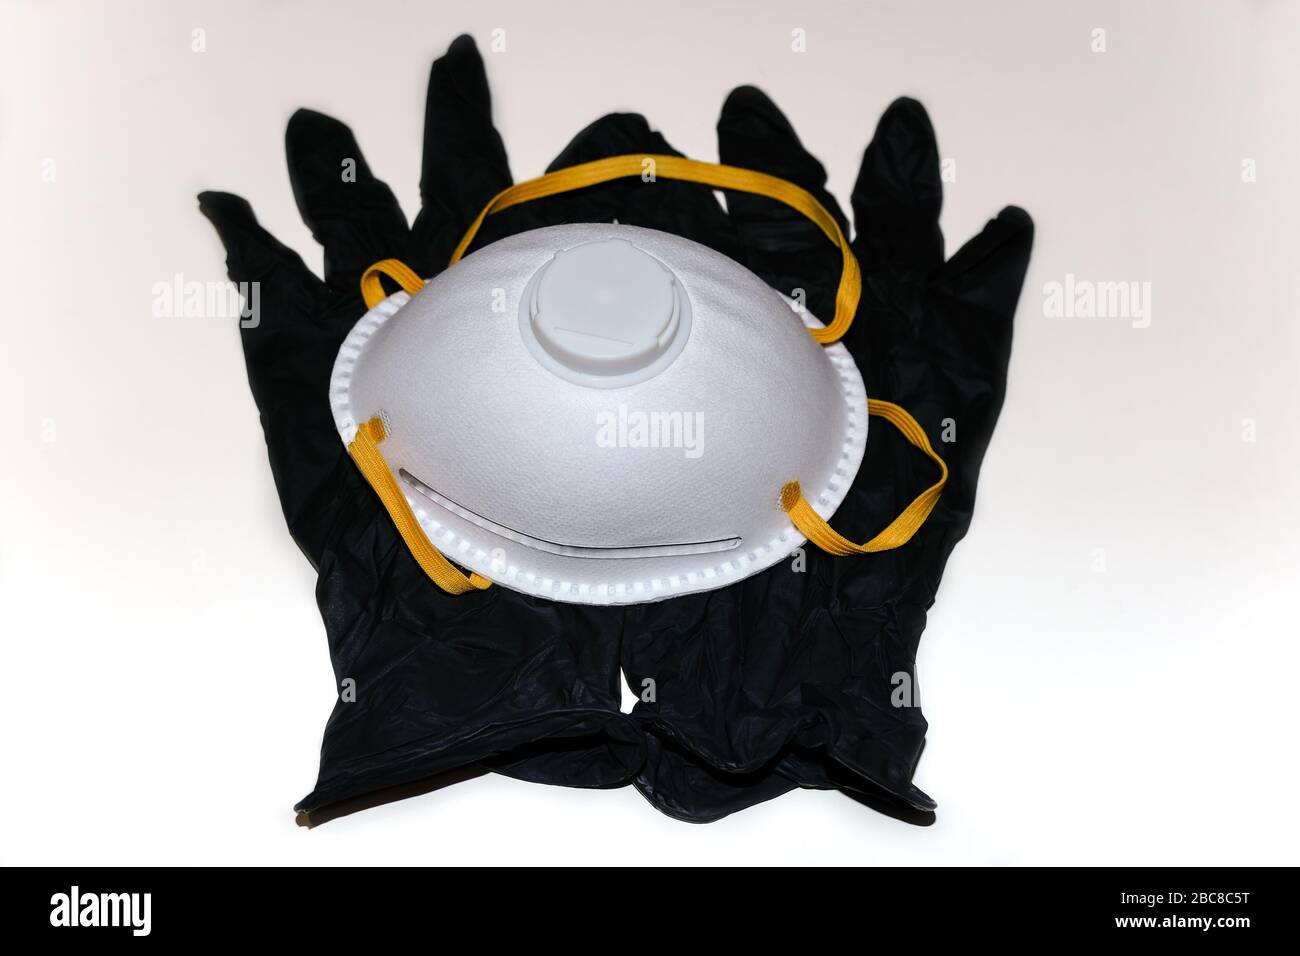 Safety plastic gloves and protective virus ffp2 mask ,coronavirus covid disease control items Stock Photo